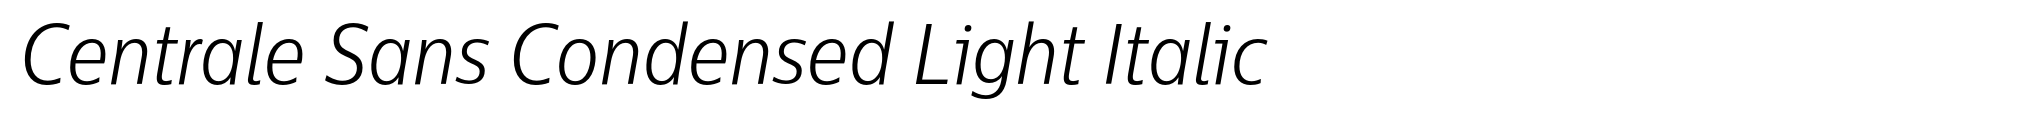 Centrale Sans Condensed Light Italic image